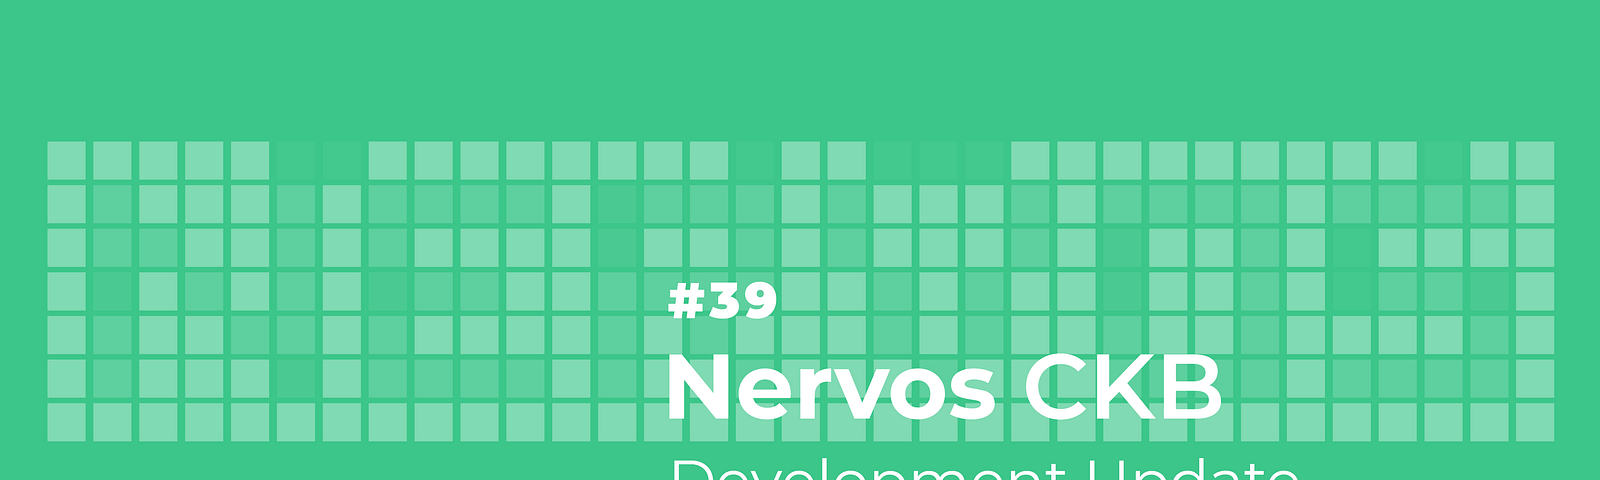 Nervos CKB development update #39